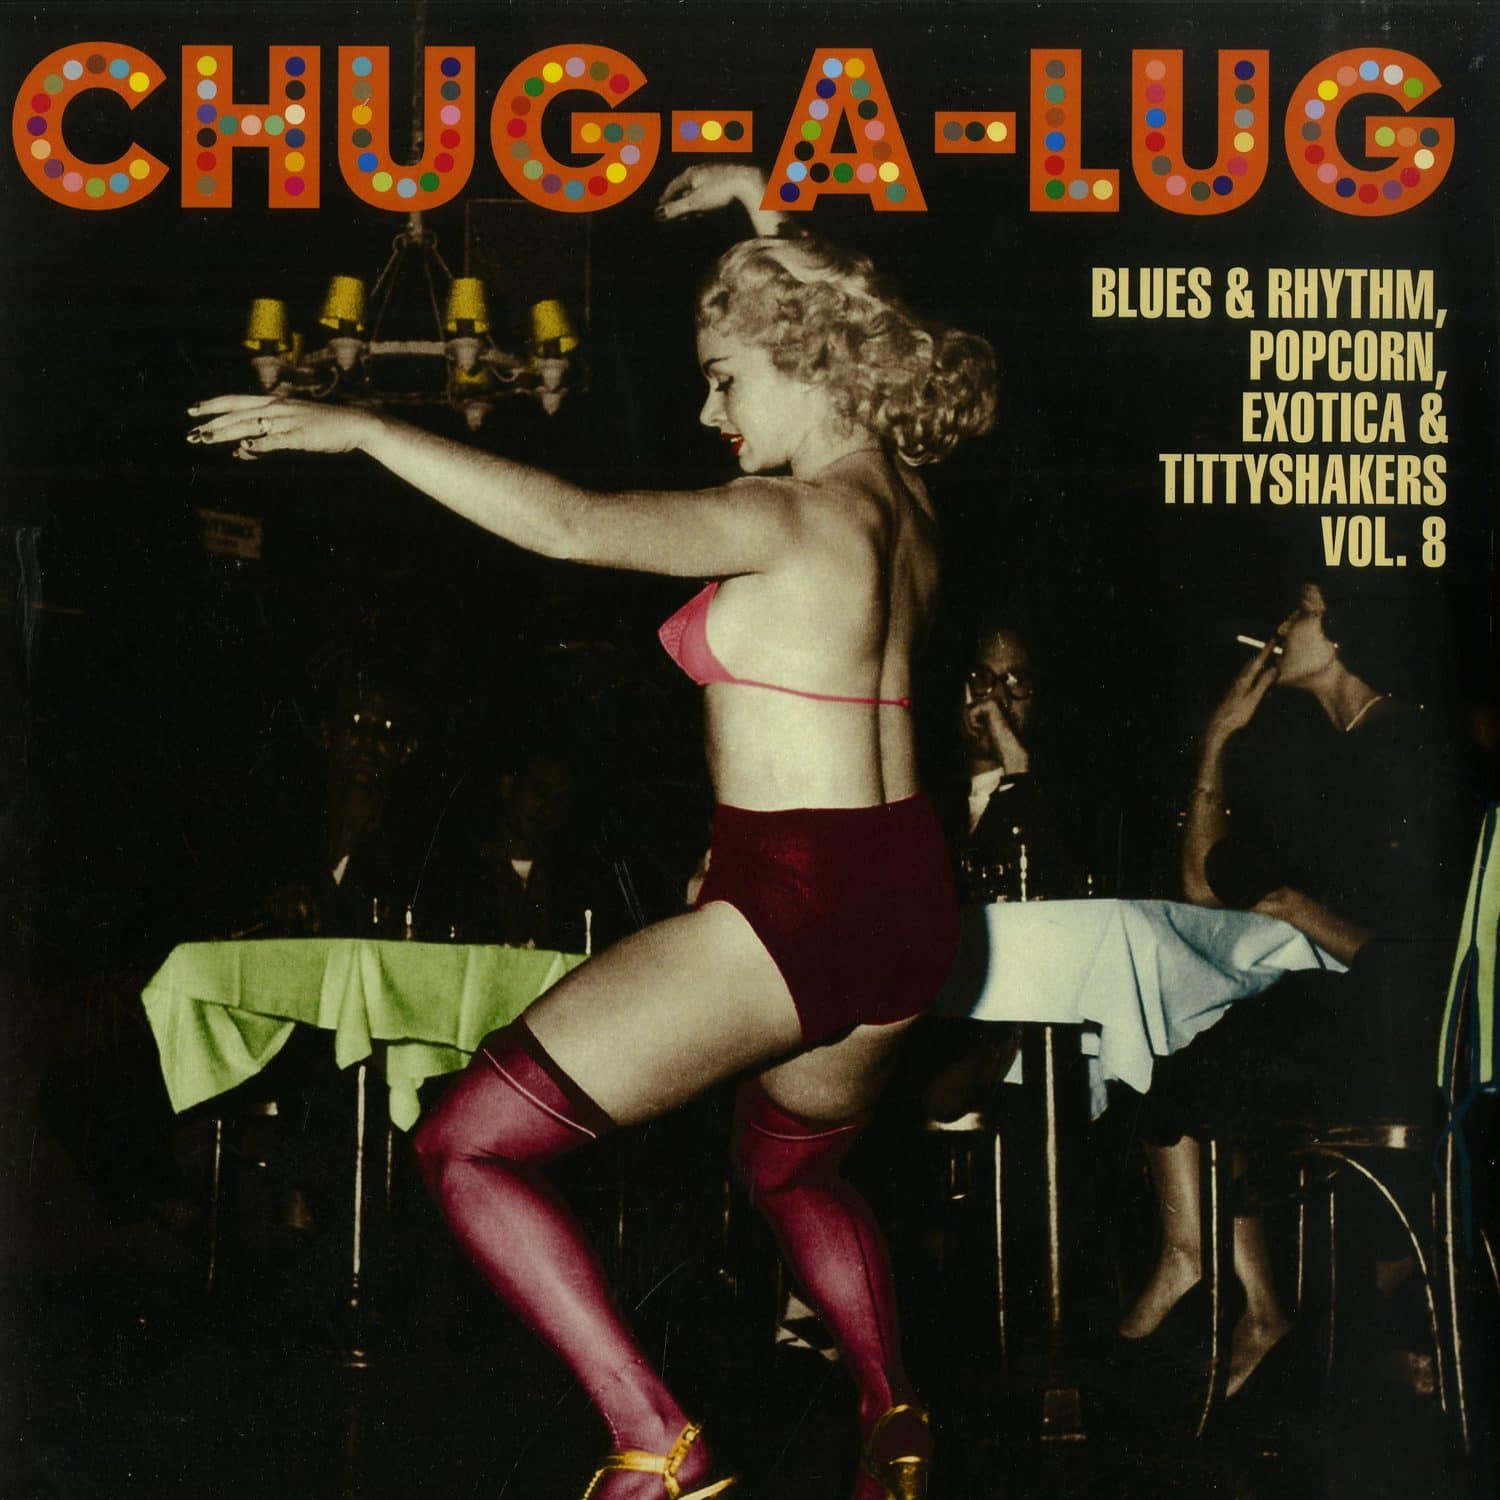 Various Artists - CHUG-A-LUG: EXOTIC BLUES & RHYTHM VOL. 8 